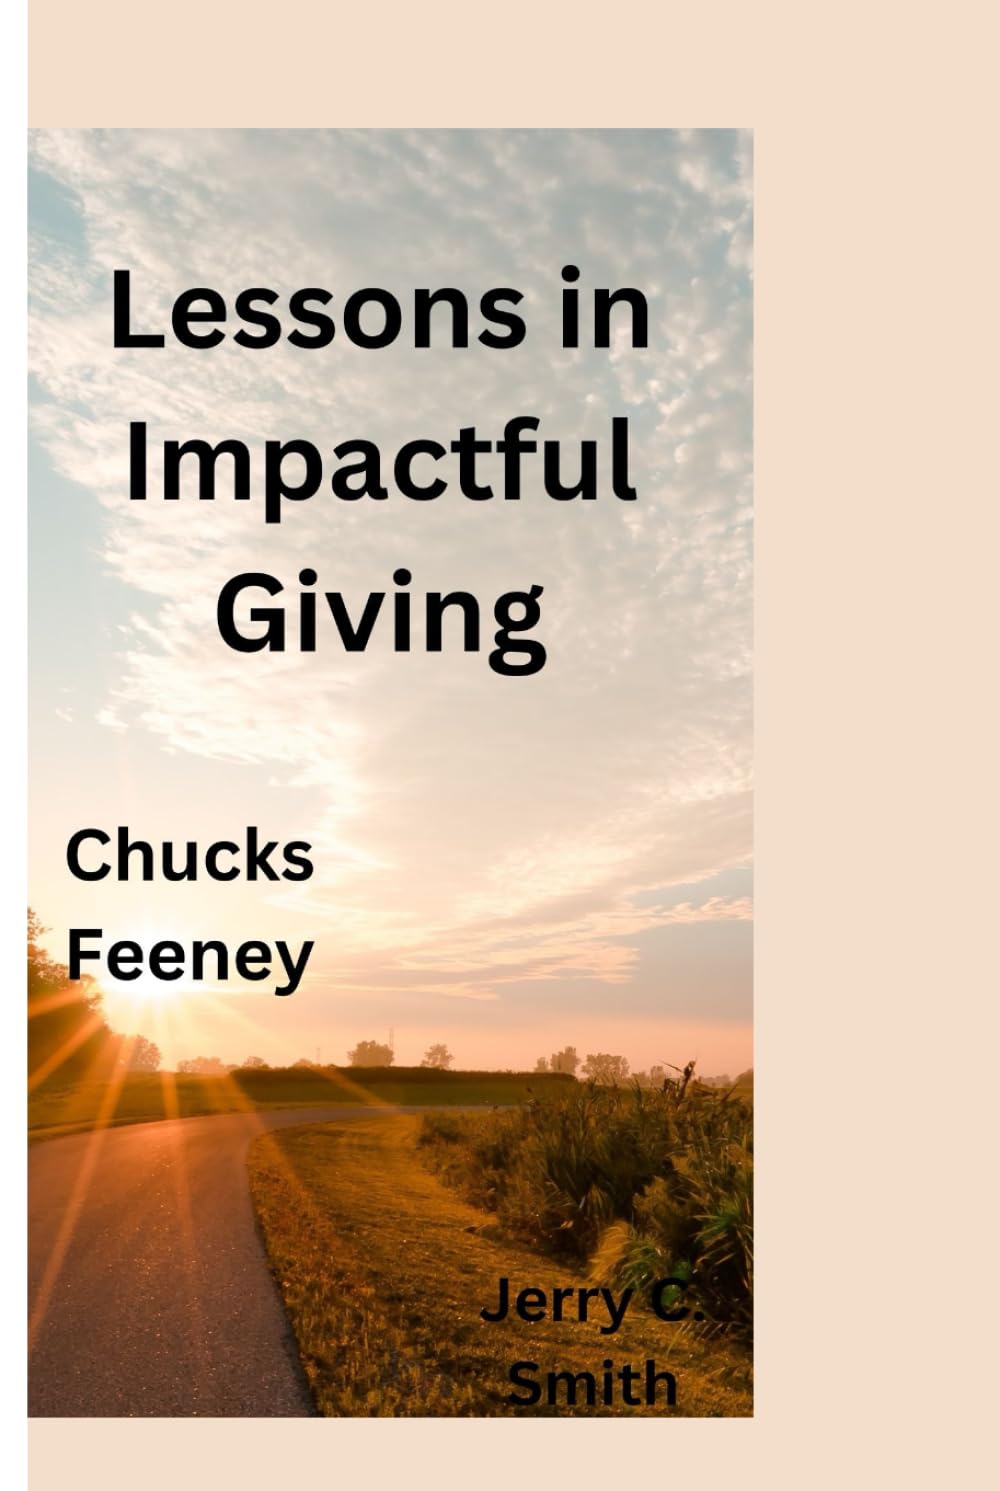 CHUCKS FEENEY: Lesson in impactful giving